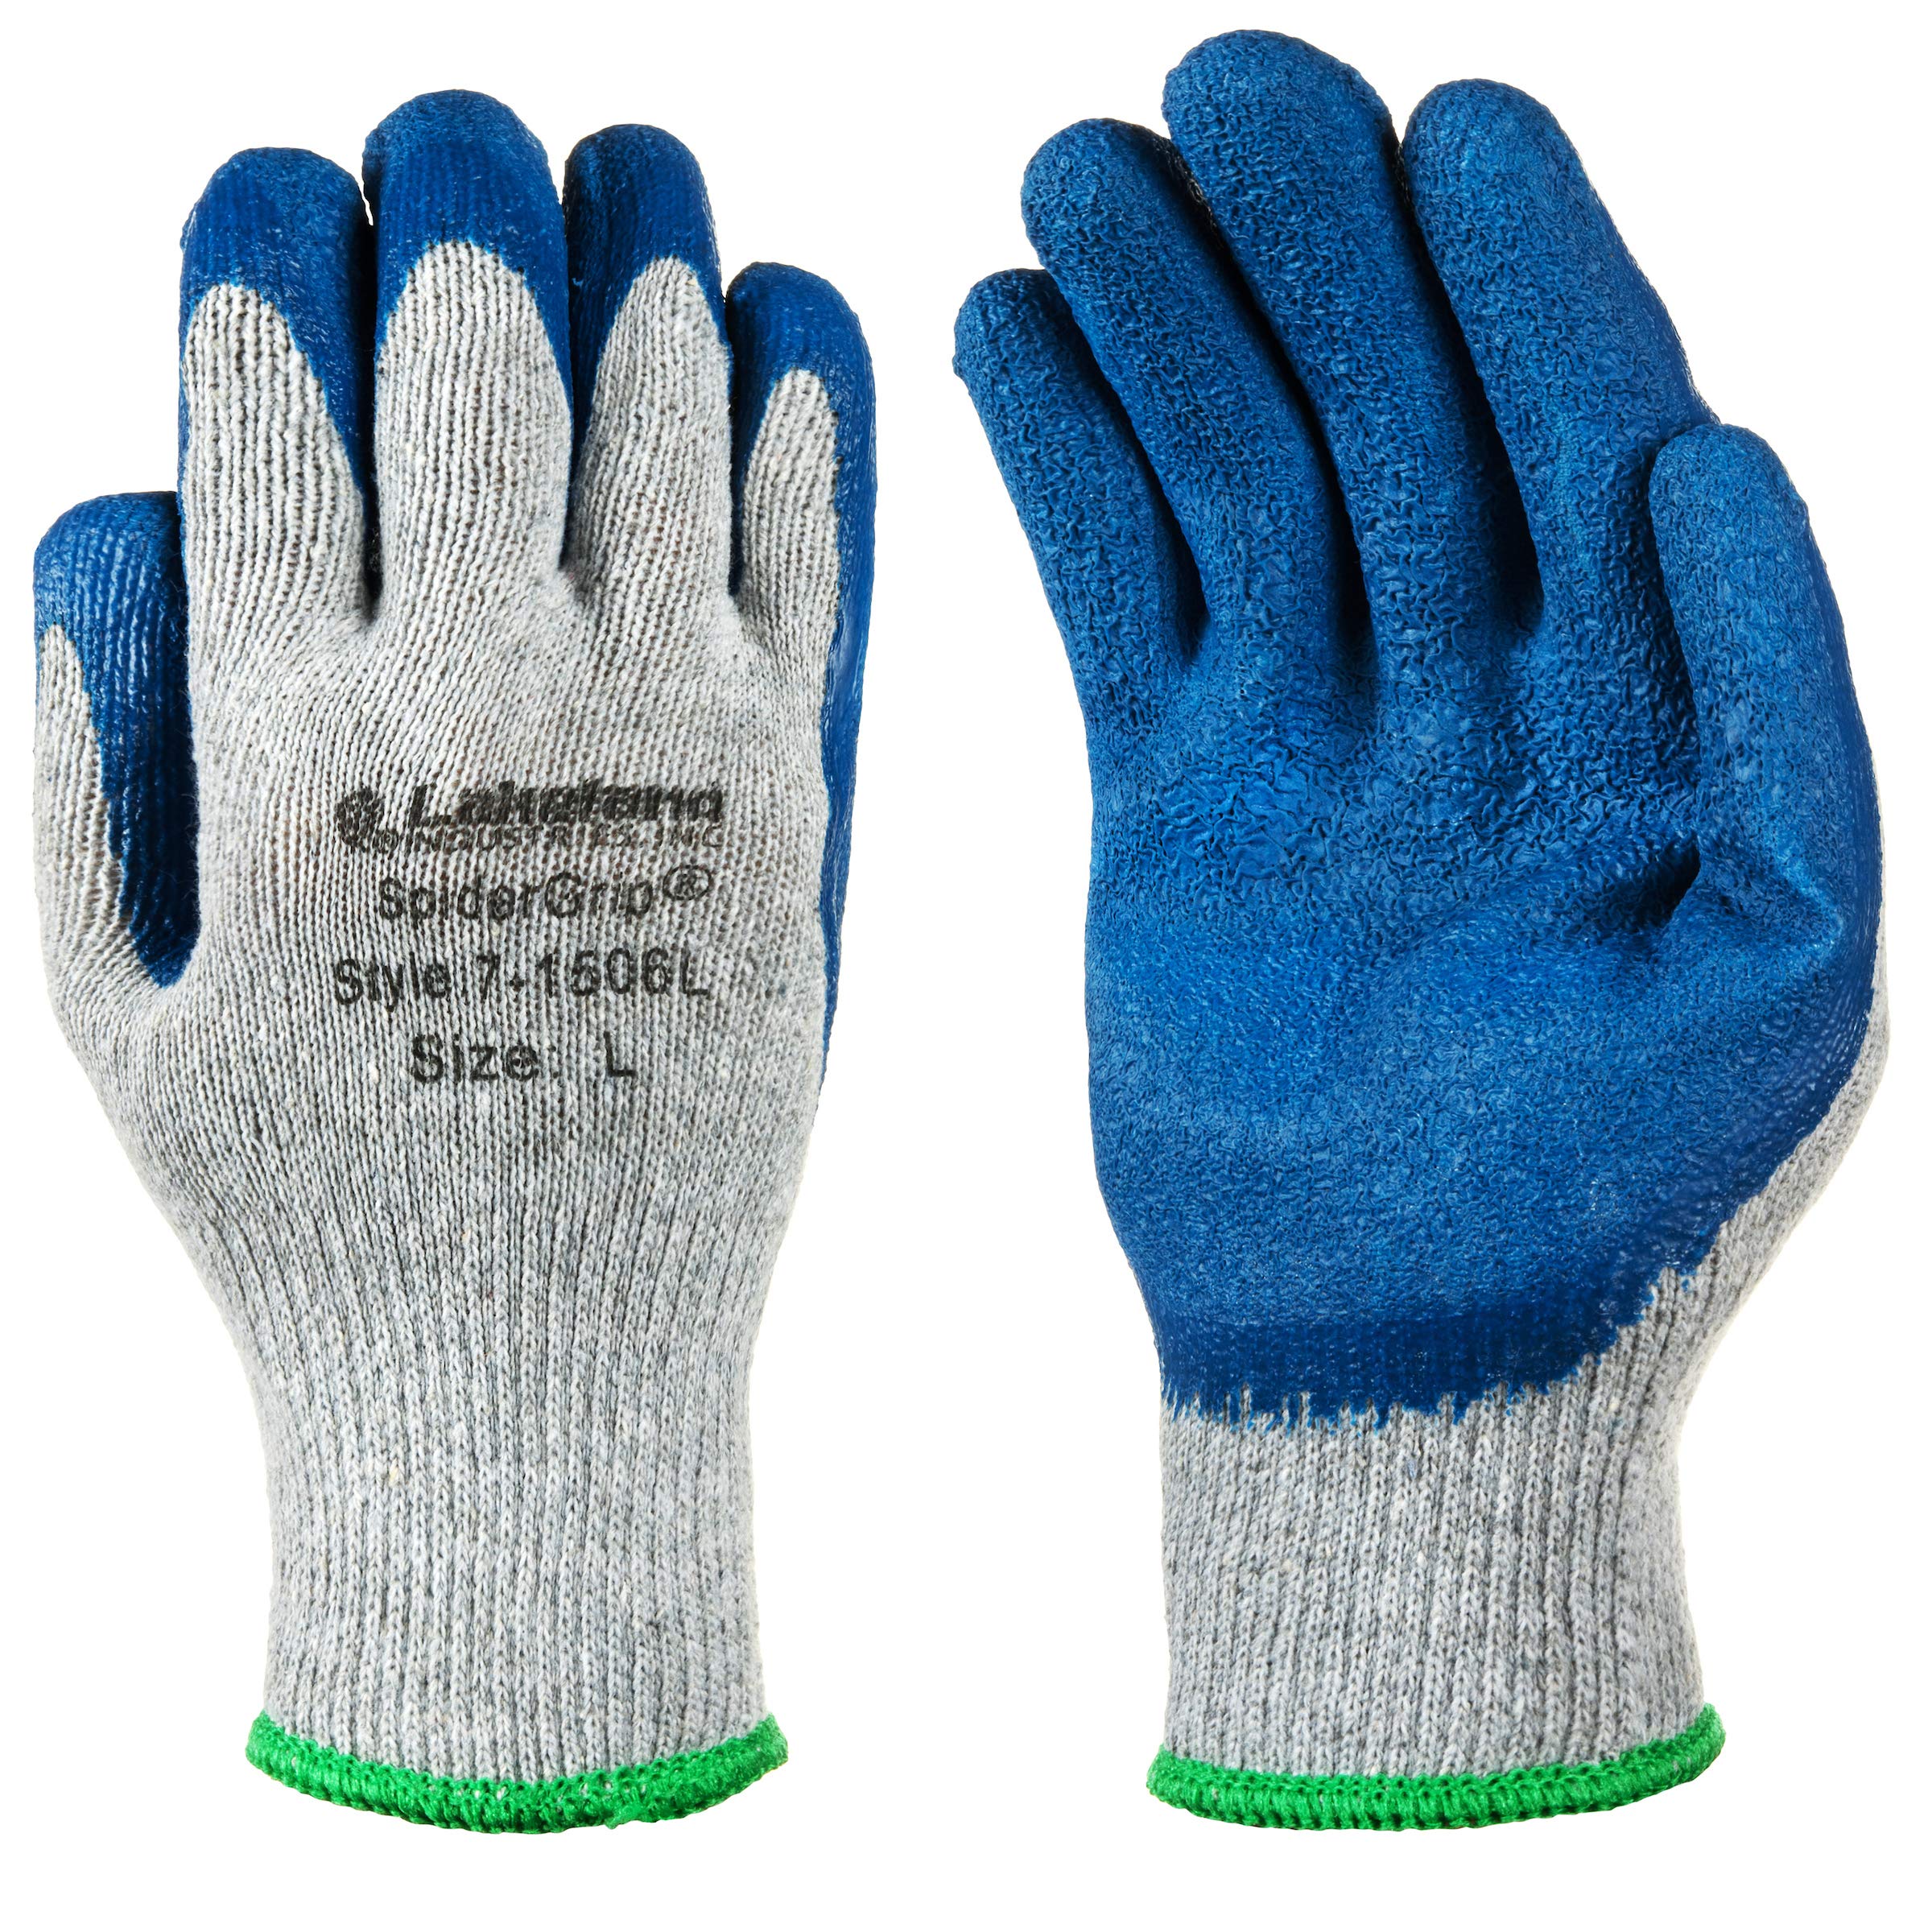 Lakeland SpiderGrip 7-1506 Dipped Latex Coated Palm, Slip Resistant, Knit Work Glove, Grip, Large, Grey/Blue (12 Pair)